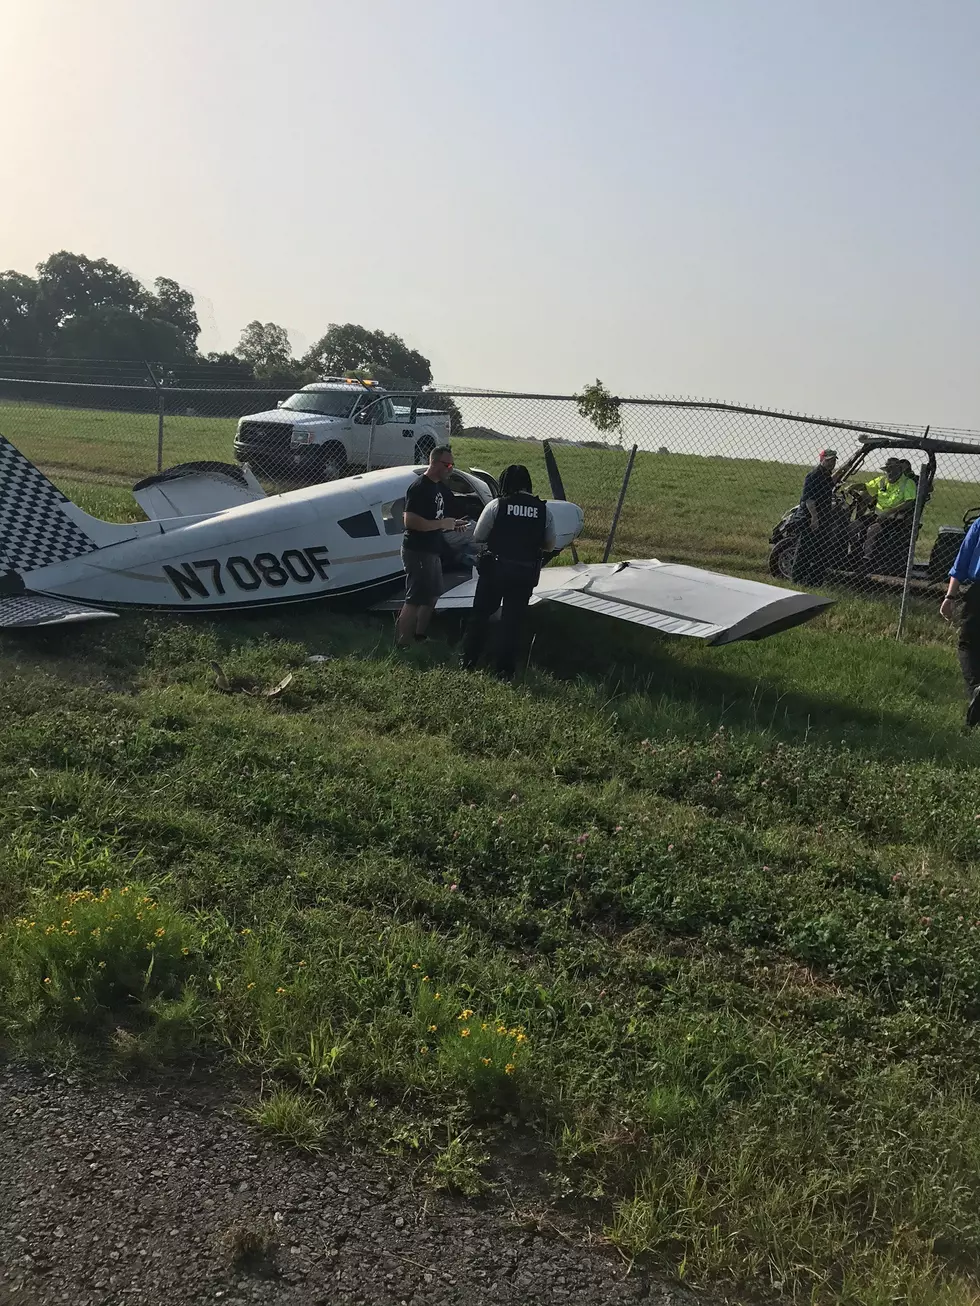 BREAKING: Plane Crash at Shreveport&#8217;s Downtown Airport